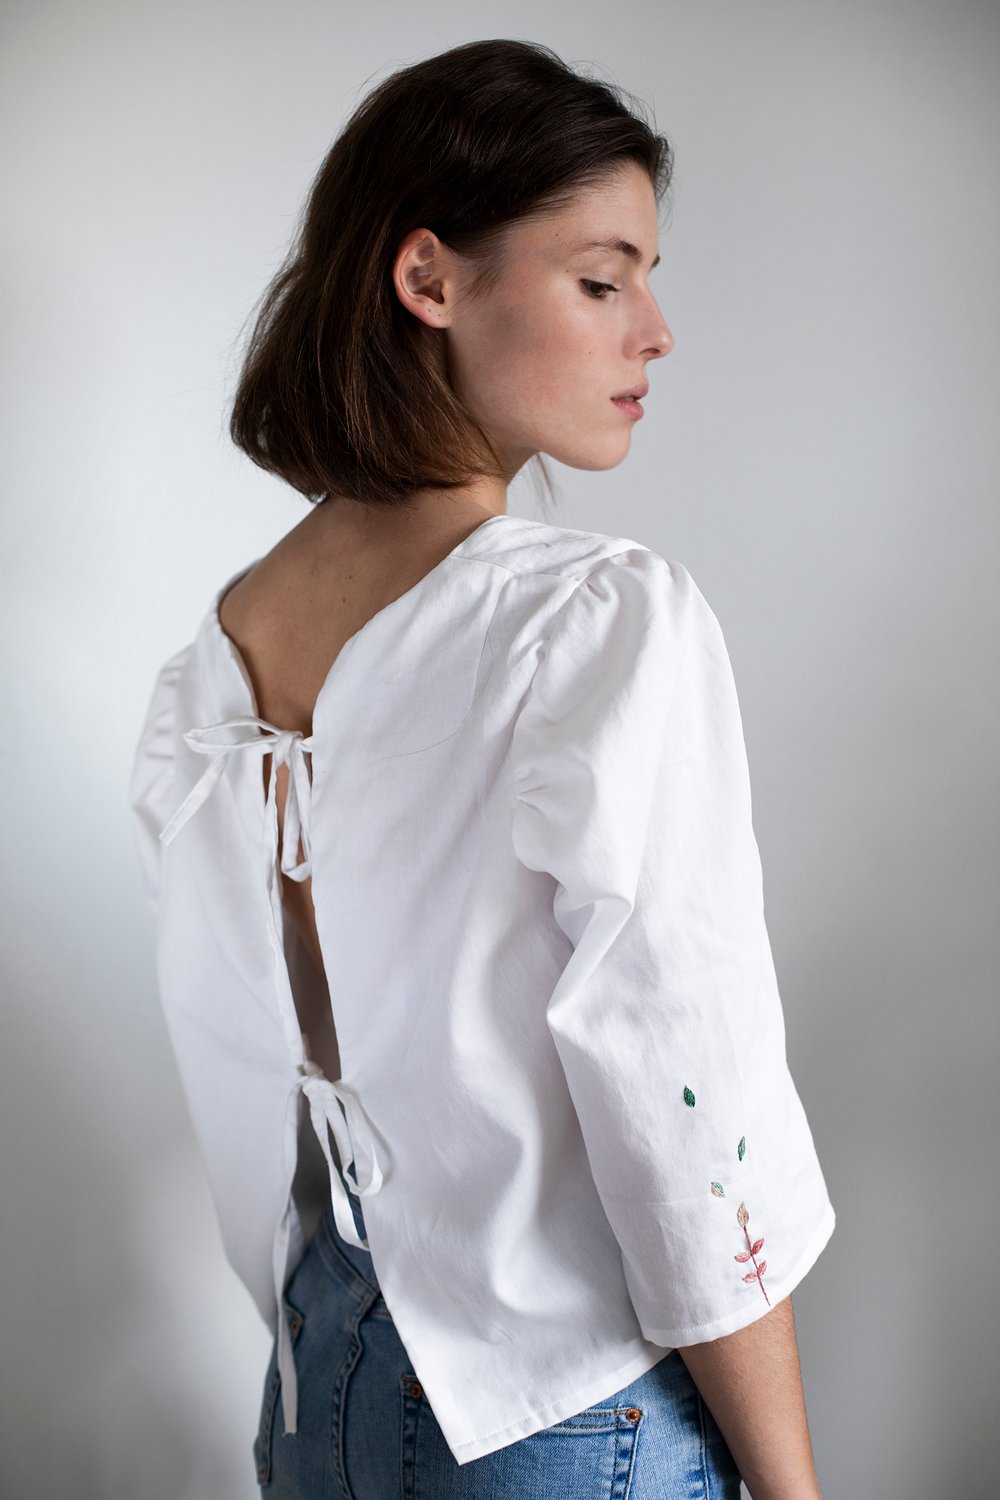 Image of Pre-order: Margareth shirt - 2nd Damaja designed shirt, made of 100% organic cotton in Berlin